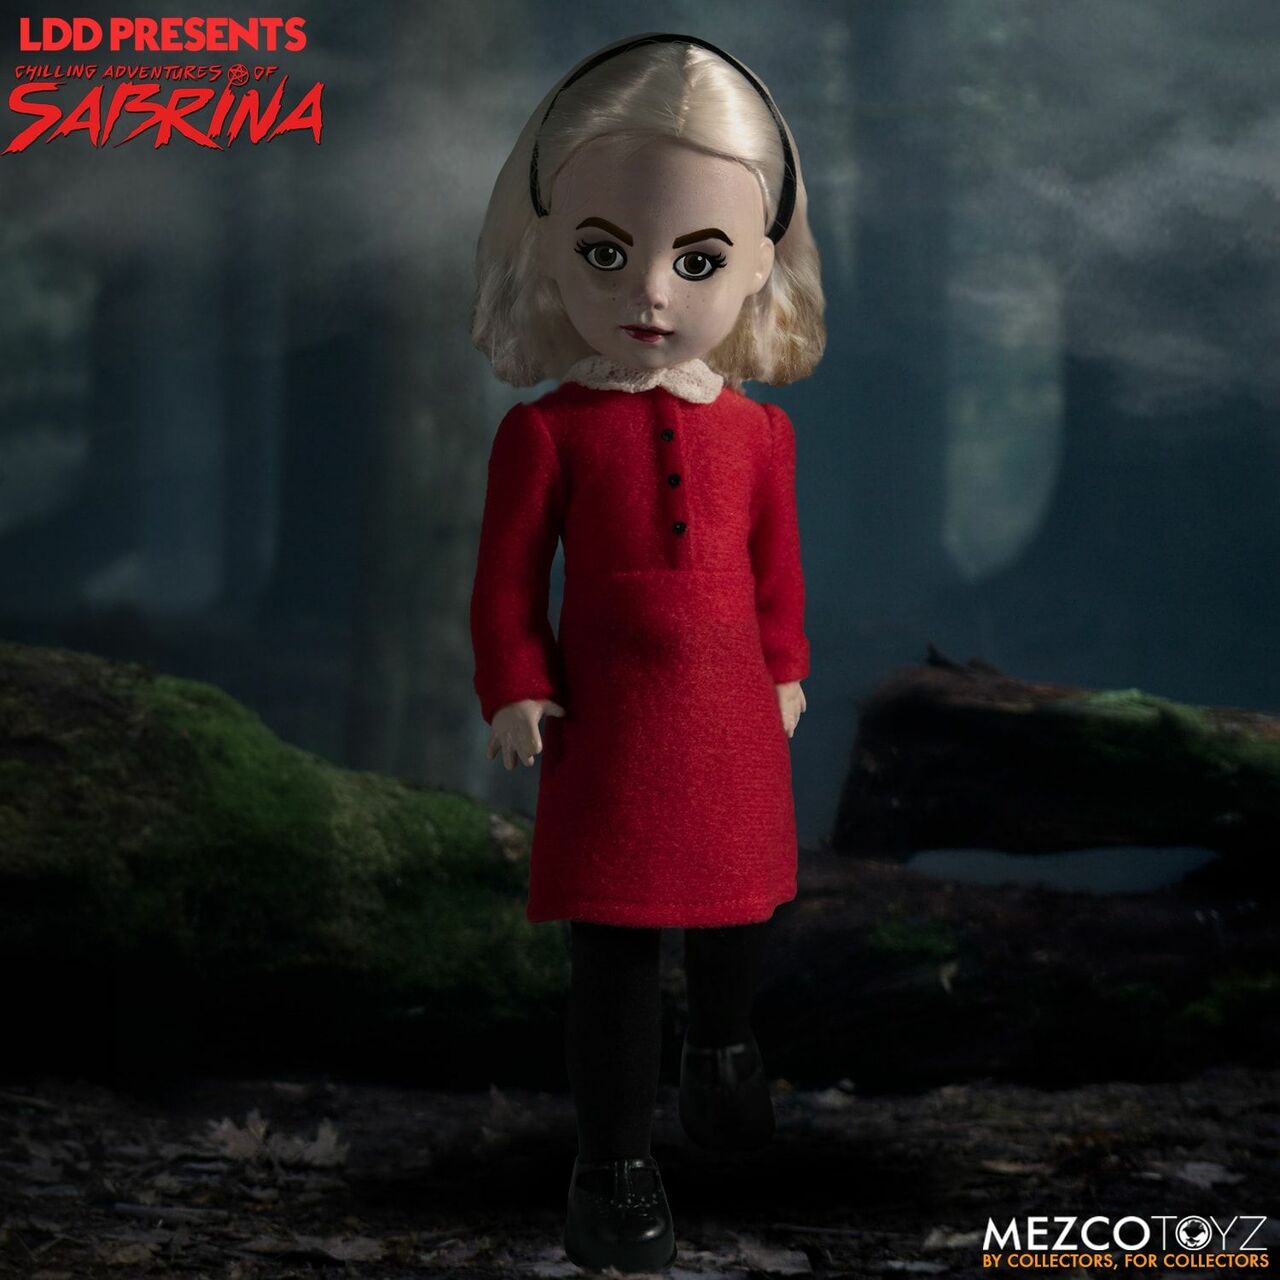 MEZCO TOYZ - LDD Presents - Chilling Adventures of Sabrina 10" Tall Figure